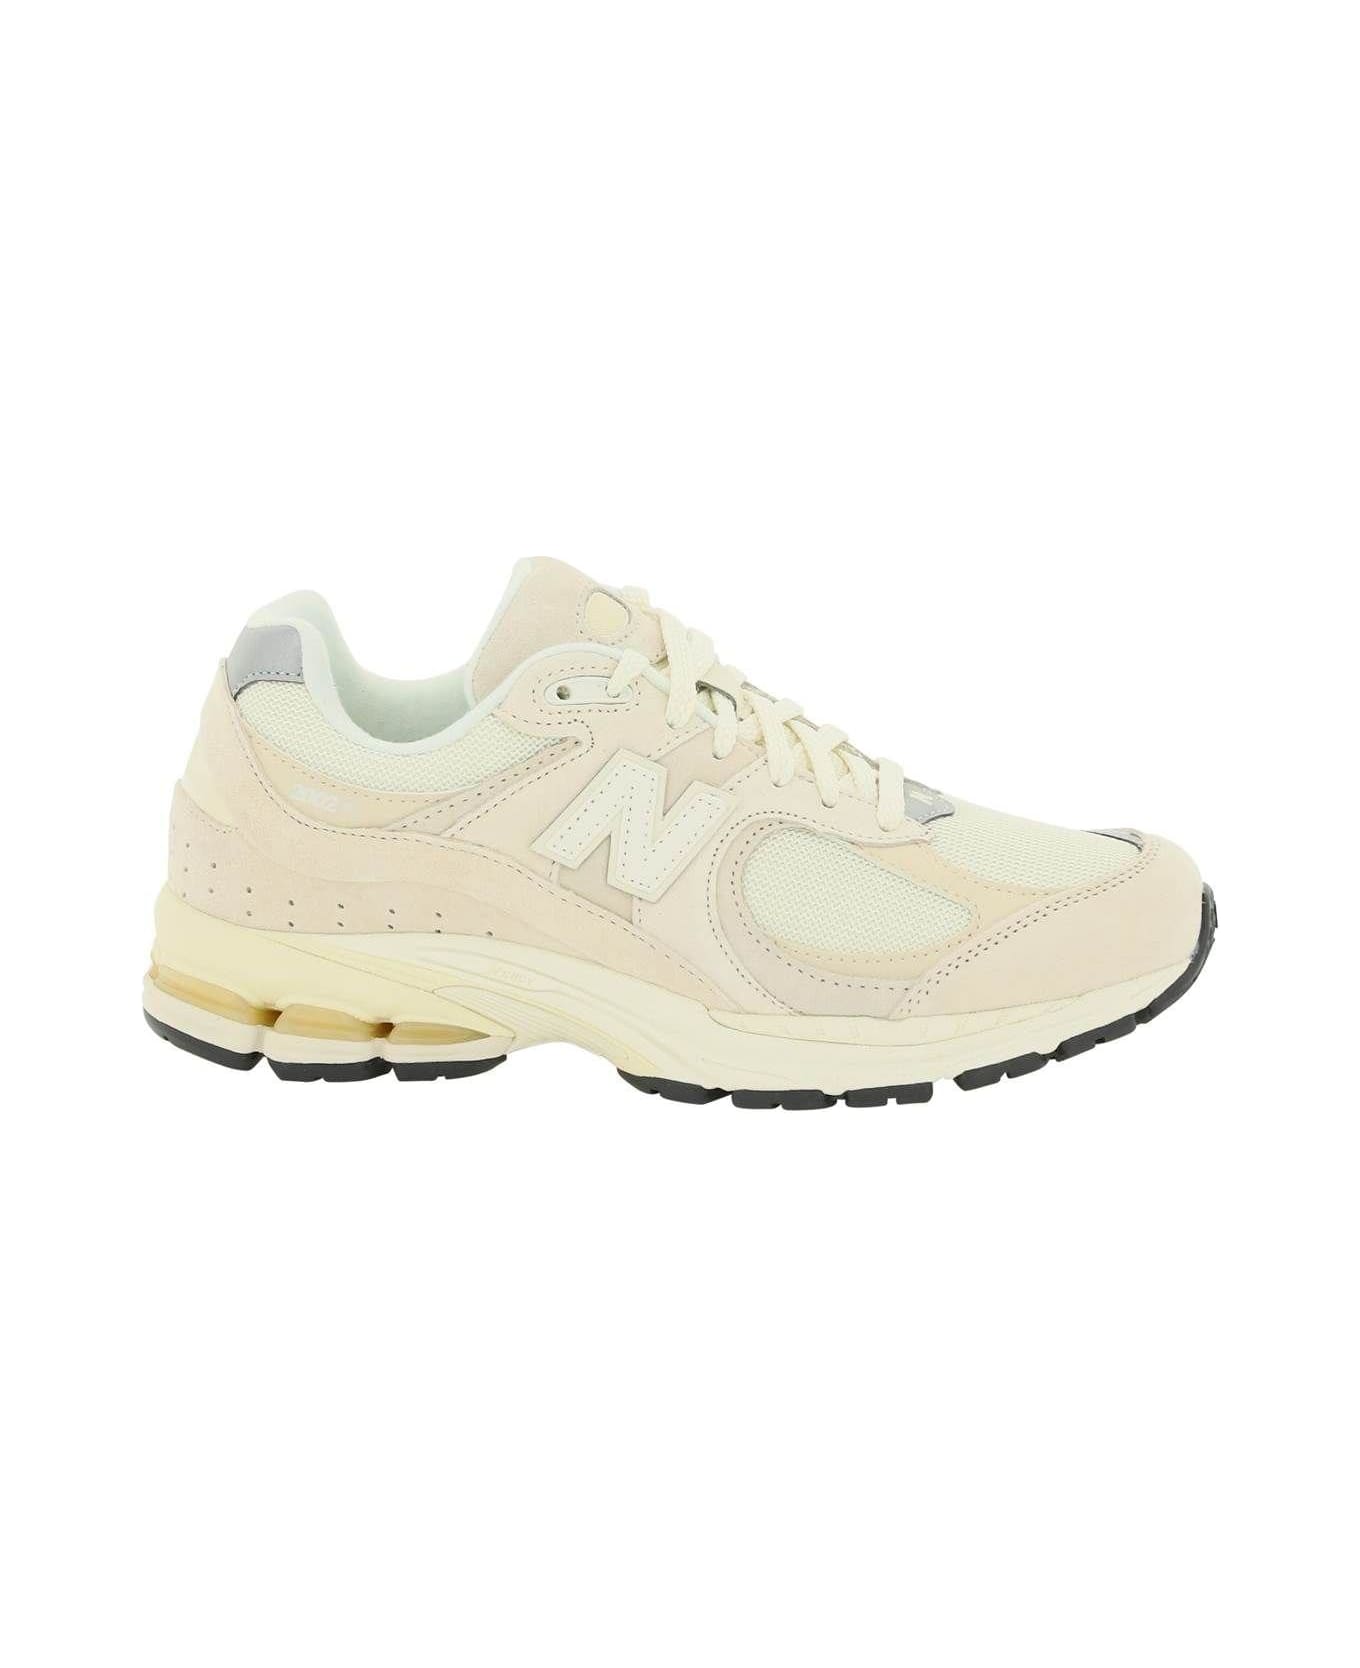 New Balance 2002r Sneakers - White スニーカー